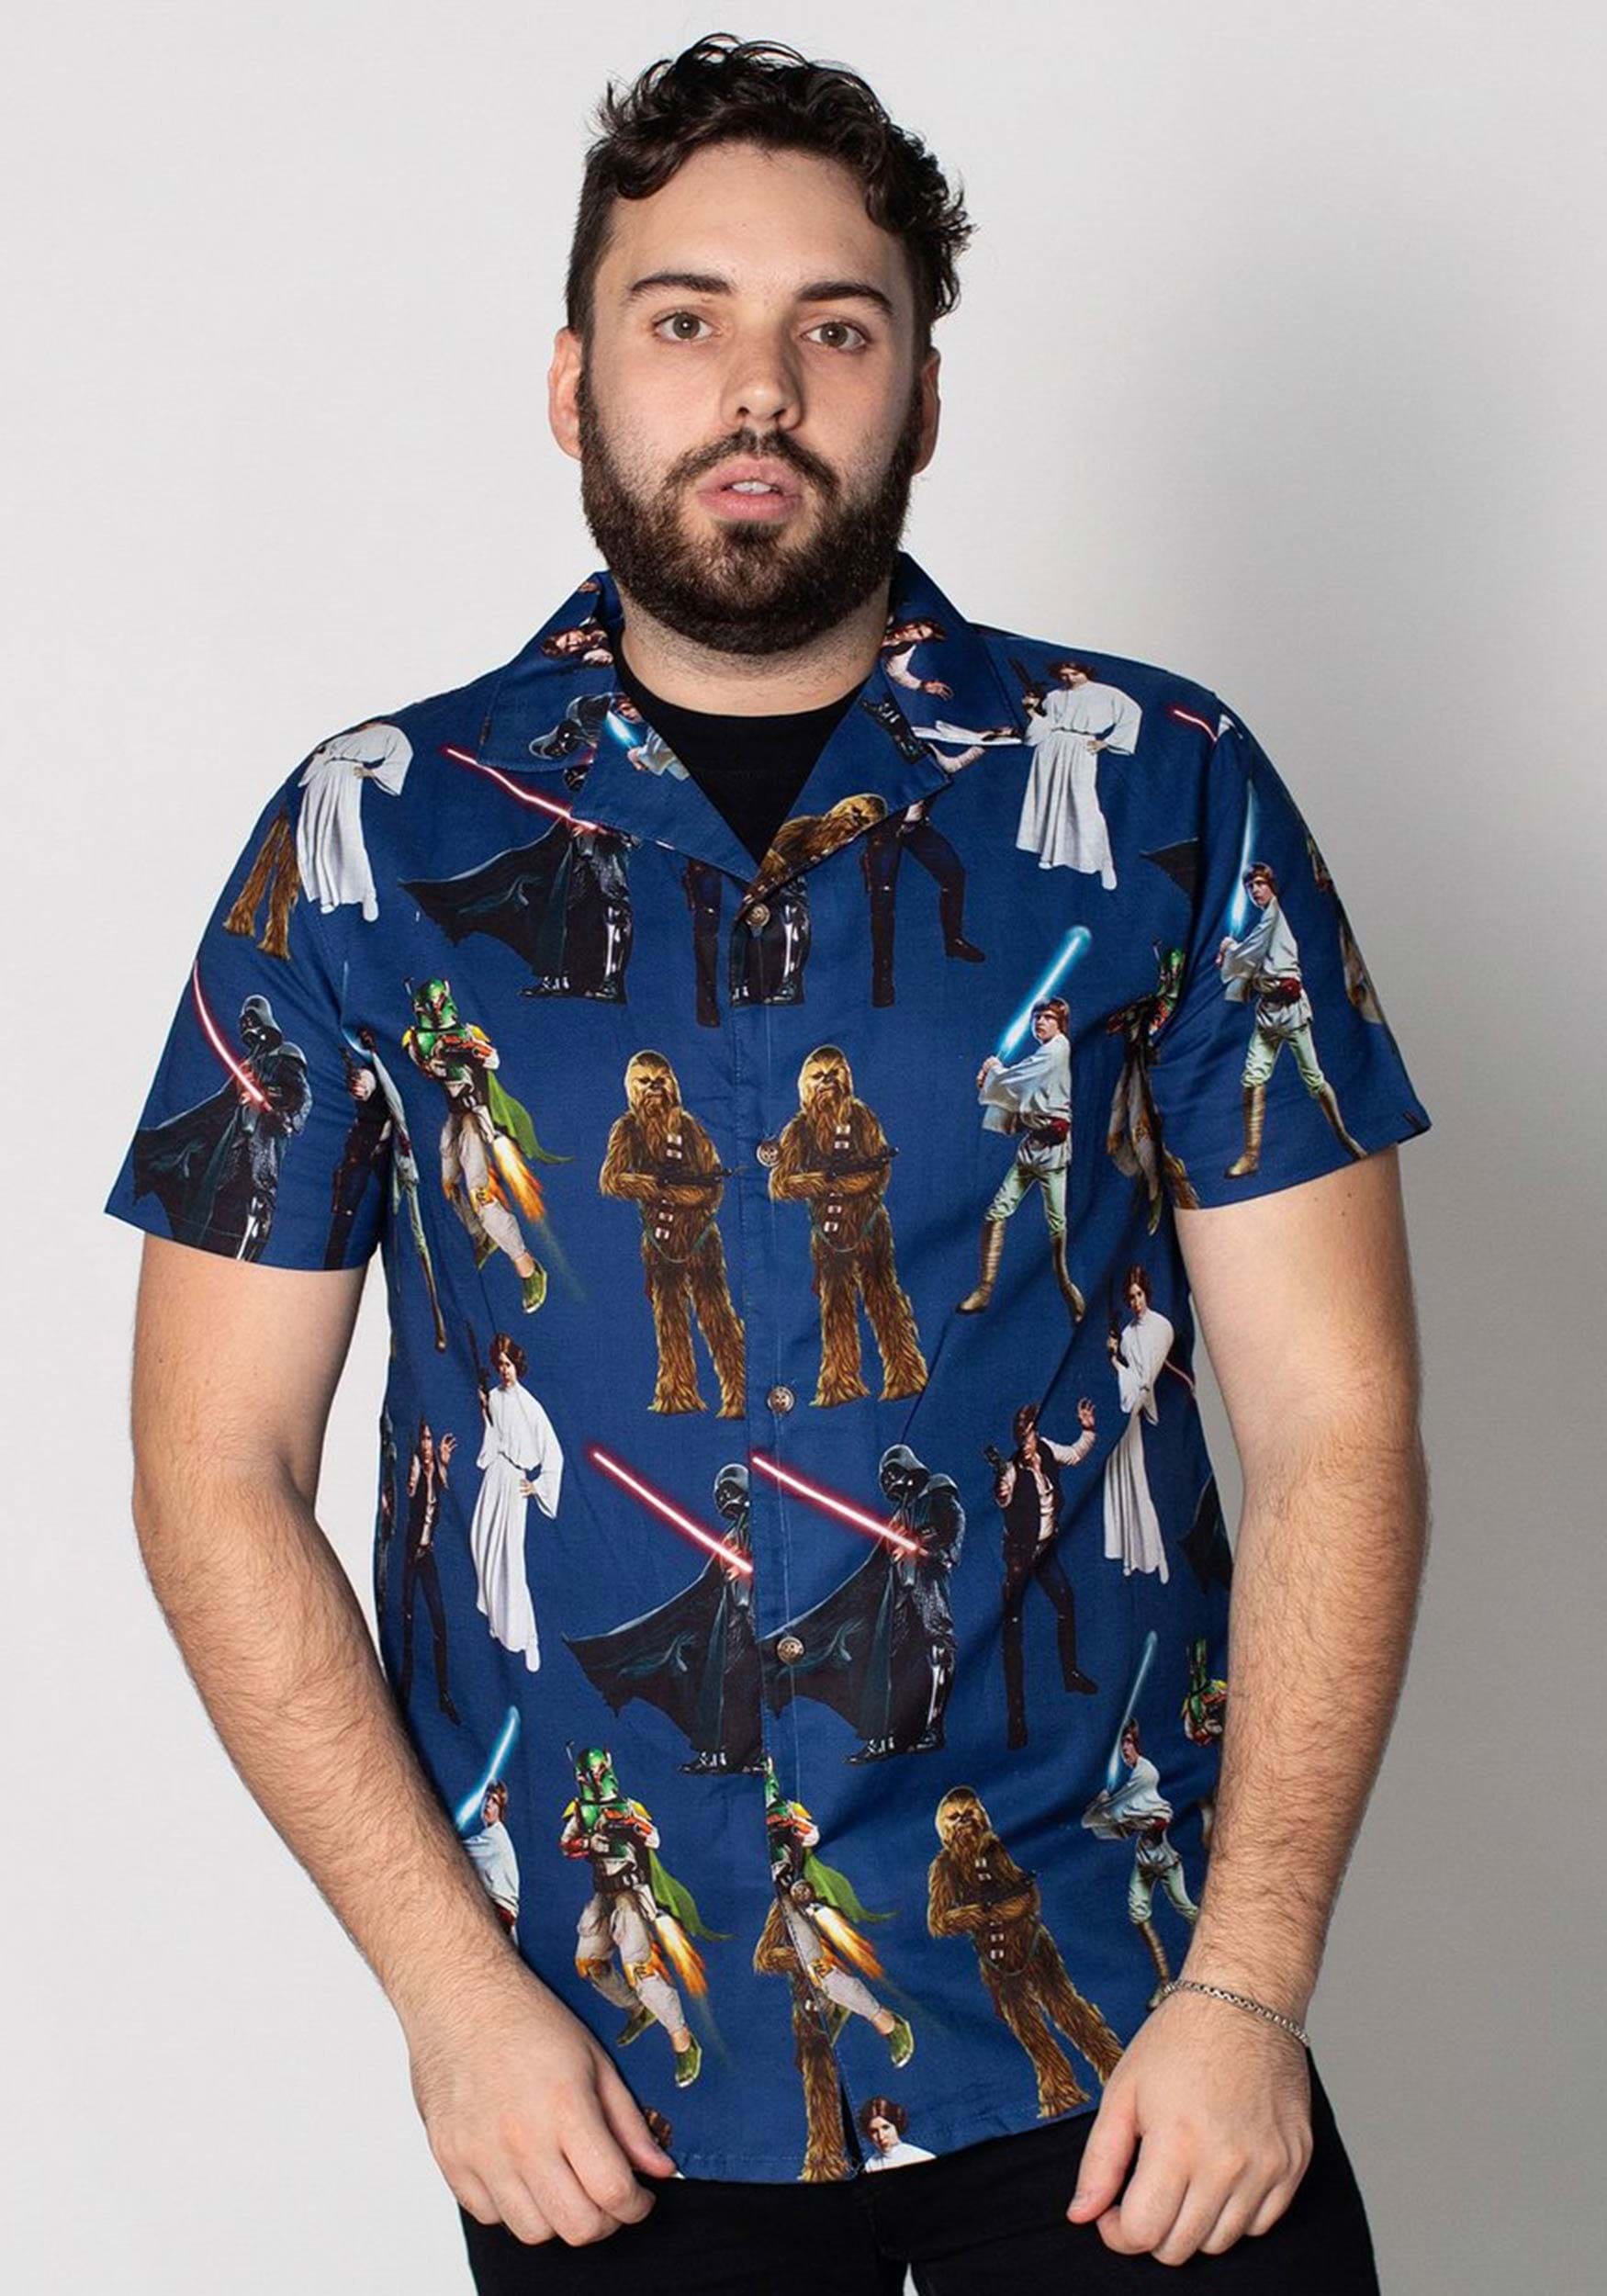 Unisex Cakeworthy Star Wars Camp Shirt